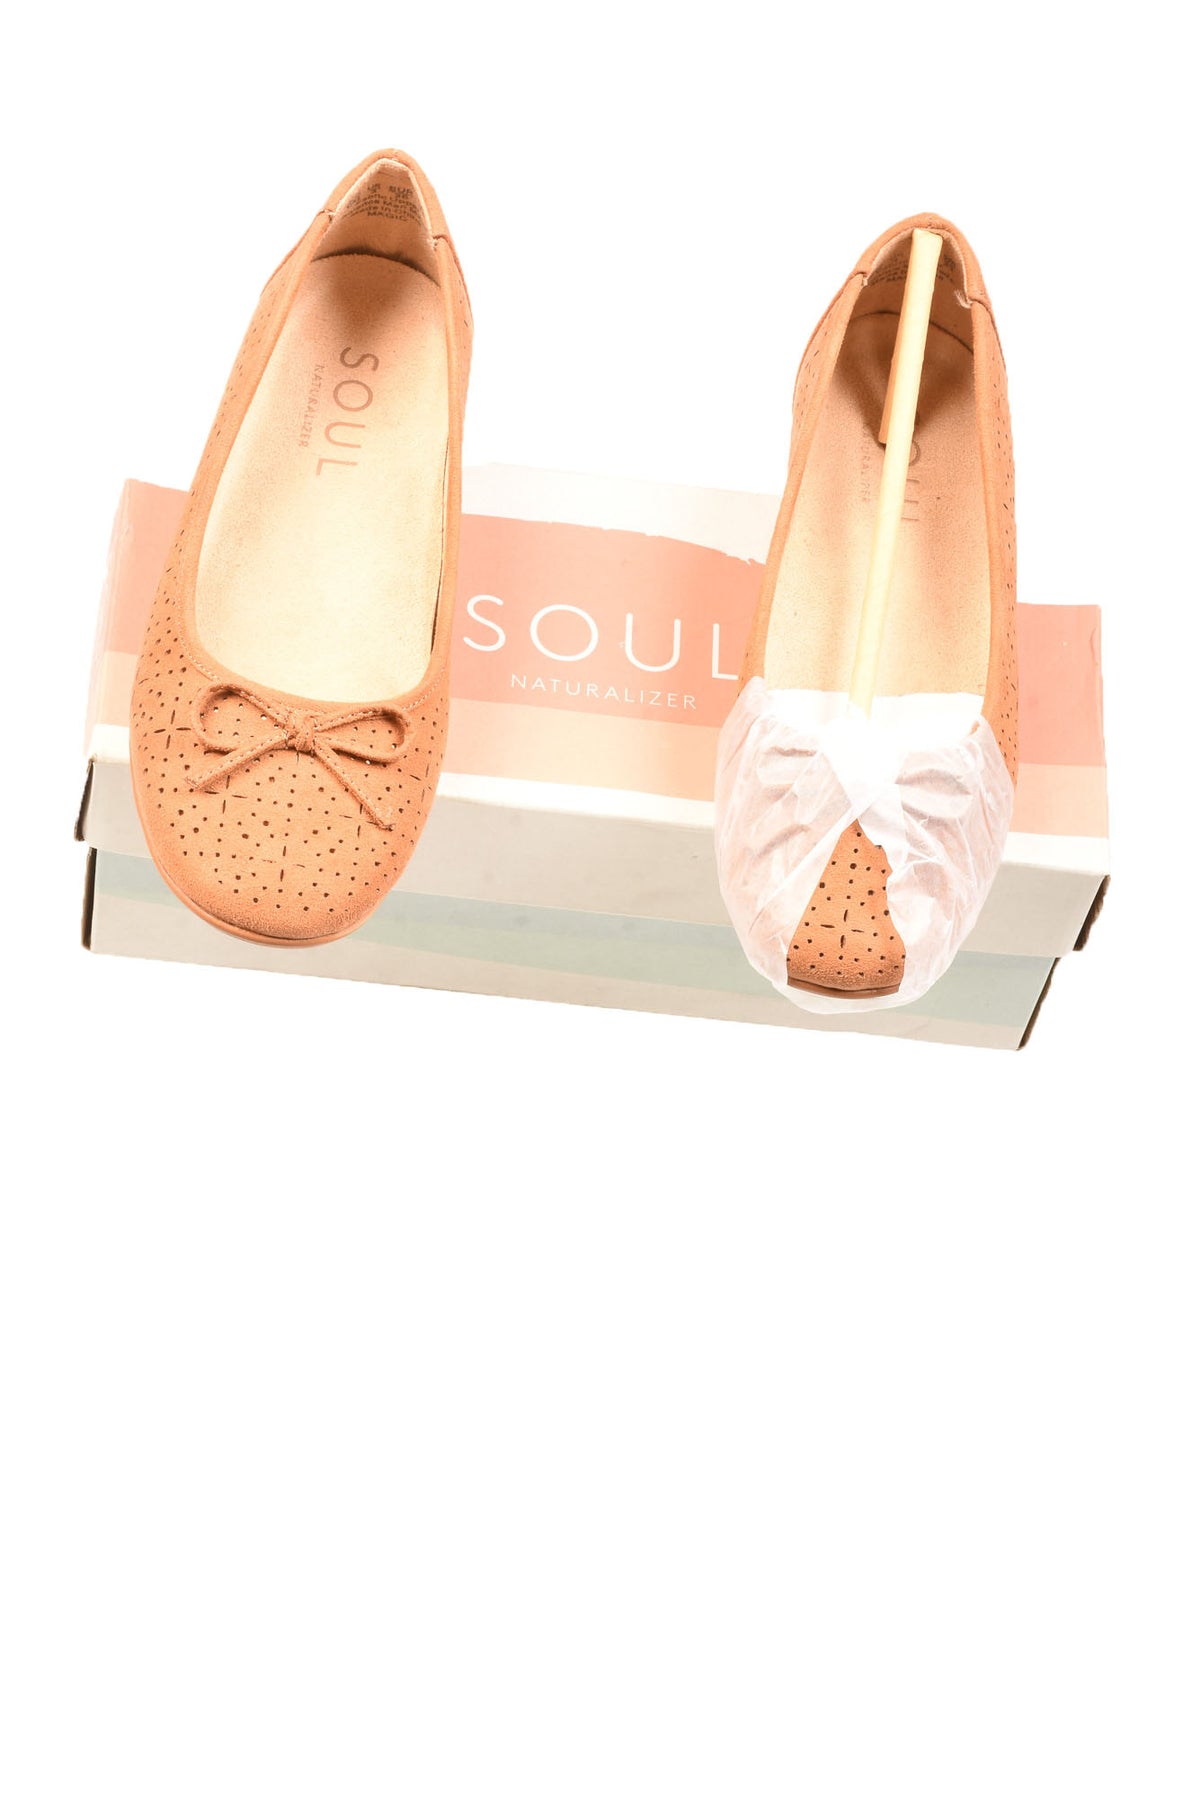 Soul Naturalizer Size 6 Women's Shoes - Your Designer Thrift